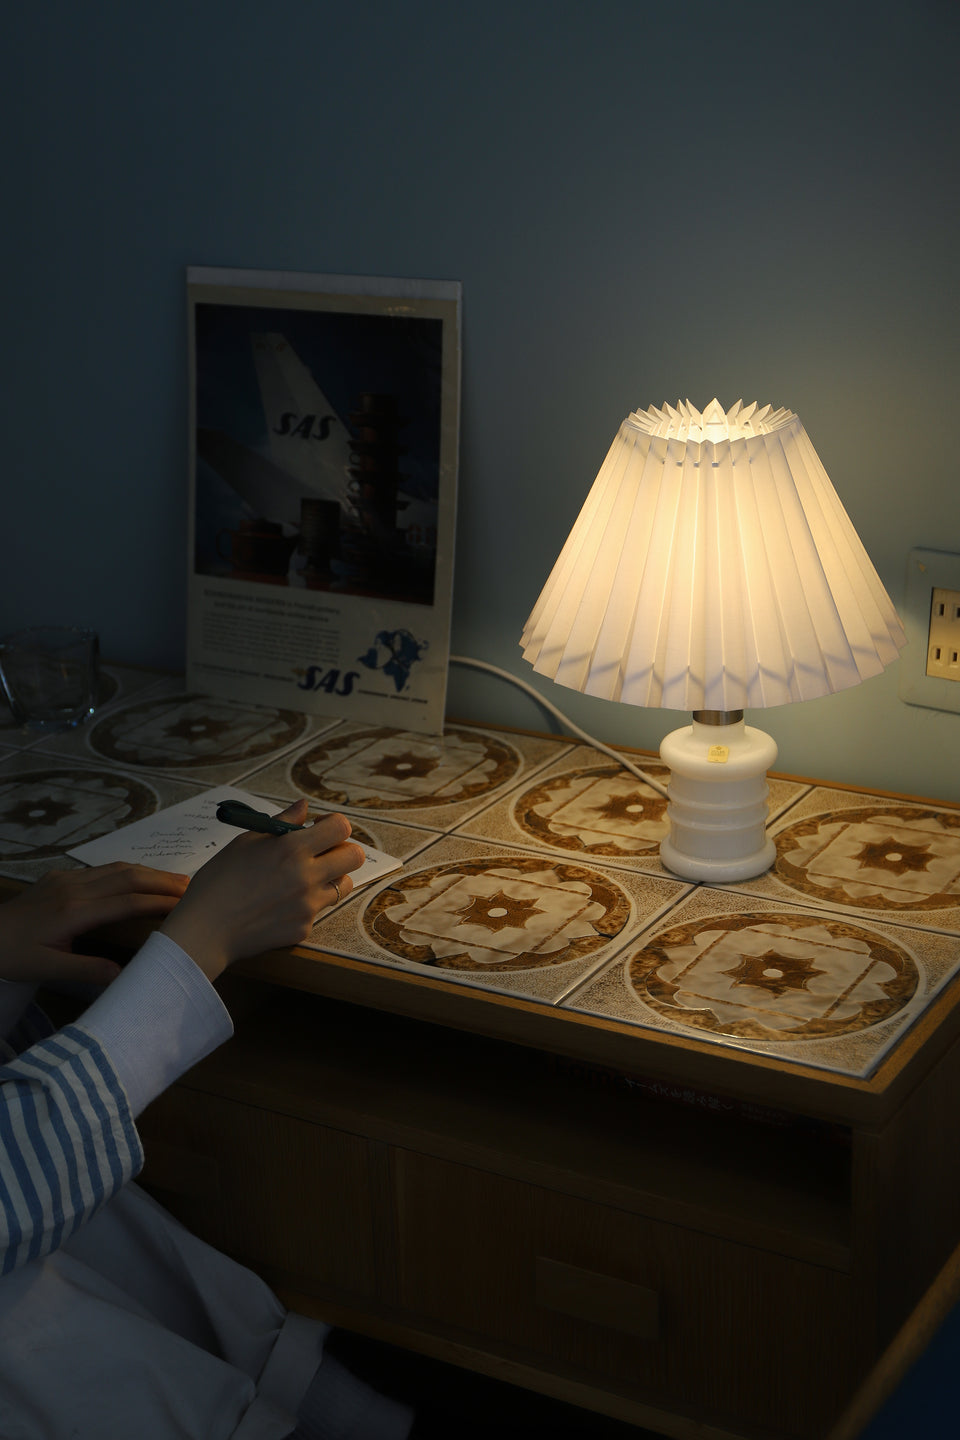 Danish Vintage Holmegaard Table Lamp Apoteker Small/ホルムガード テーブルランプ シセ・ヴェアナー スモールサイズ 間接照明 デンマークヴィンテージ